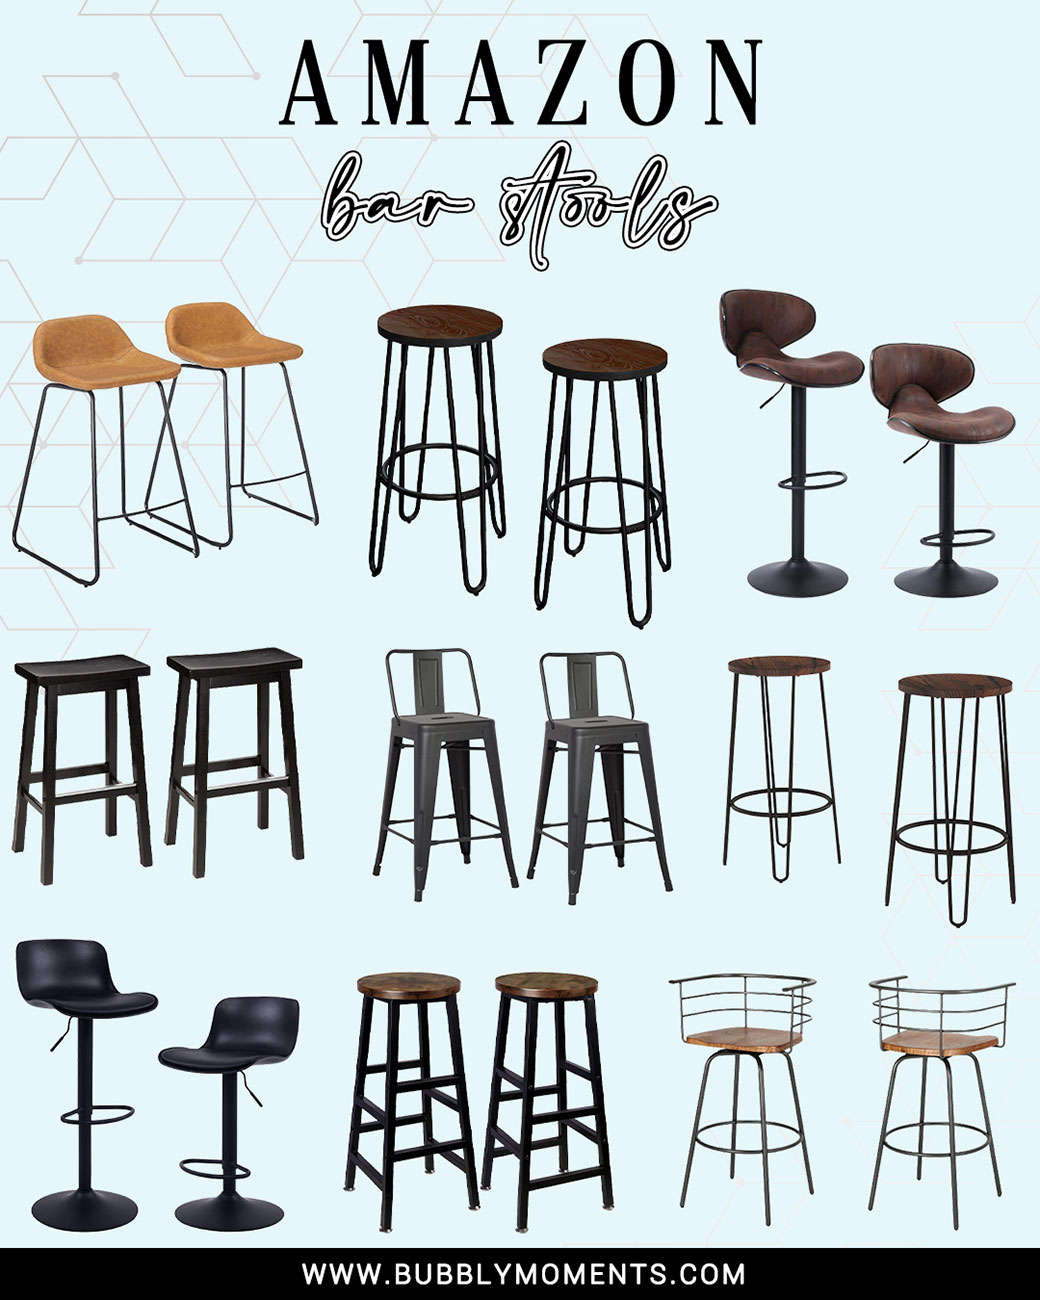 Home bar | Home bar accessories | Merch by Amazon | Stock the bar | Home bar ideas | Bar chairs| Bar stools with backs | Bar stools | Adjustable bar stools | Bubbly Moments